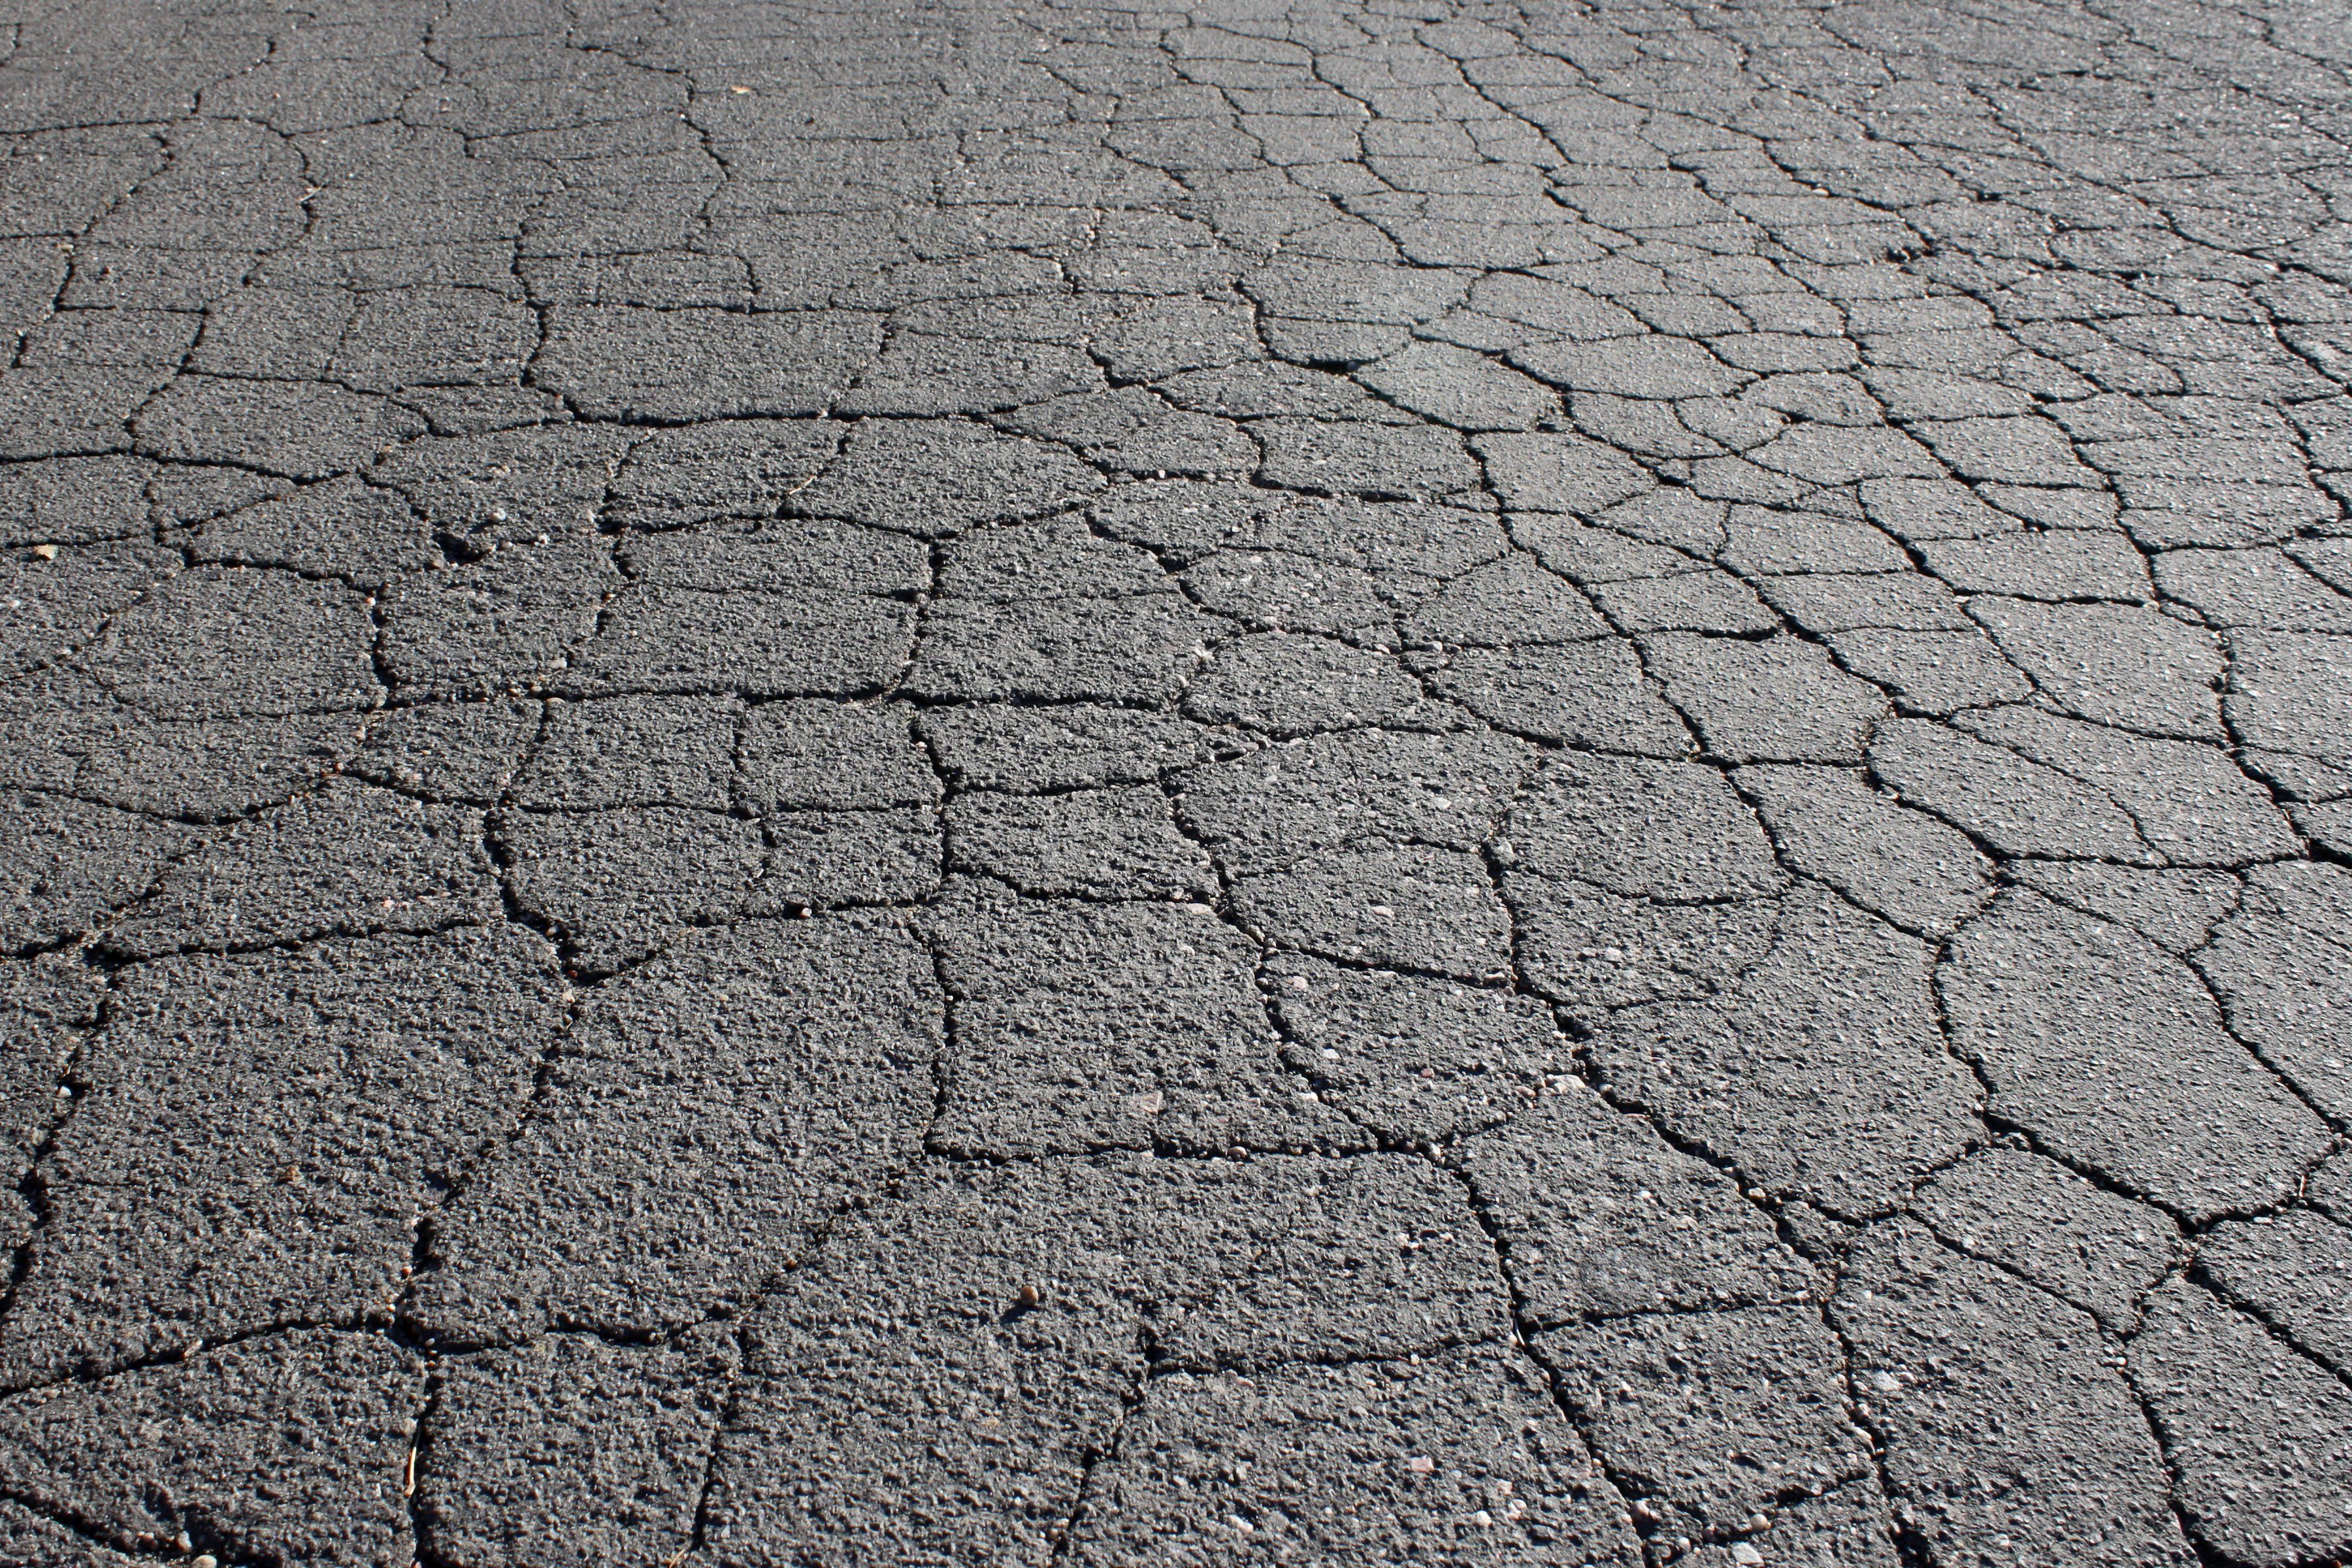 Cracked Road Asphalt | Photo Texture & Background